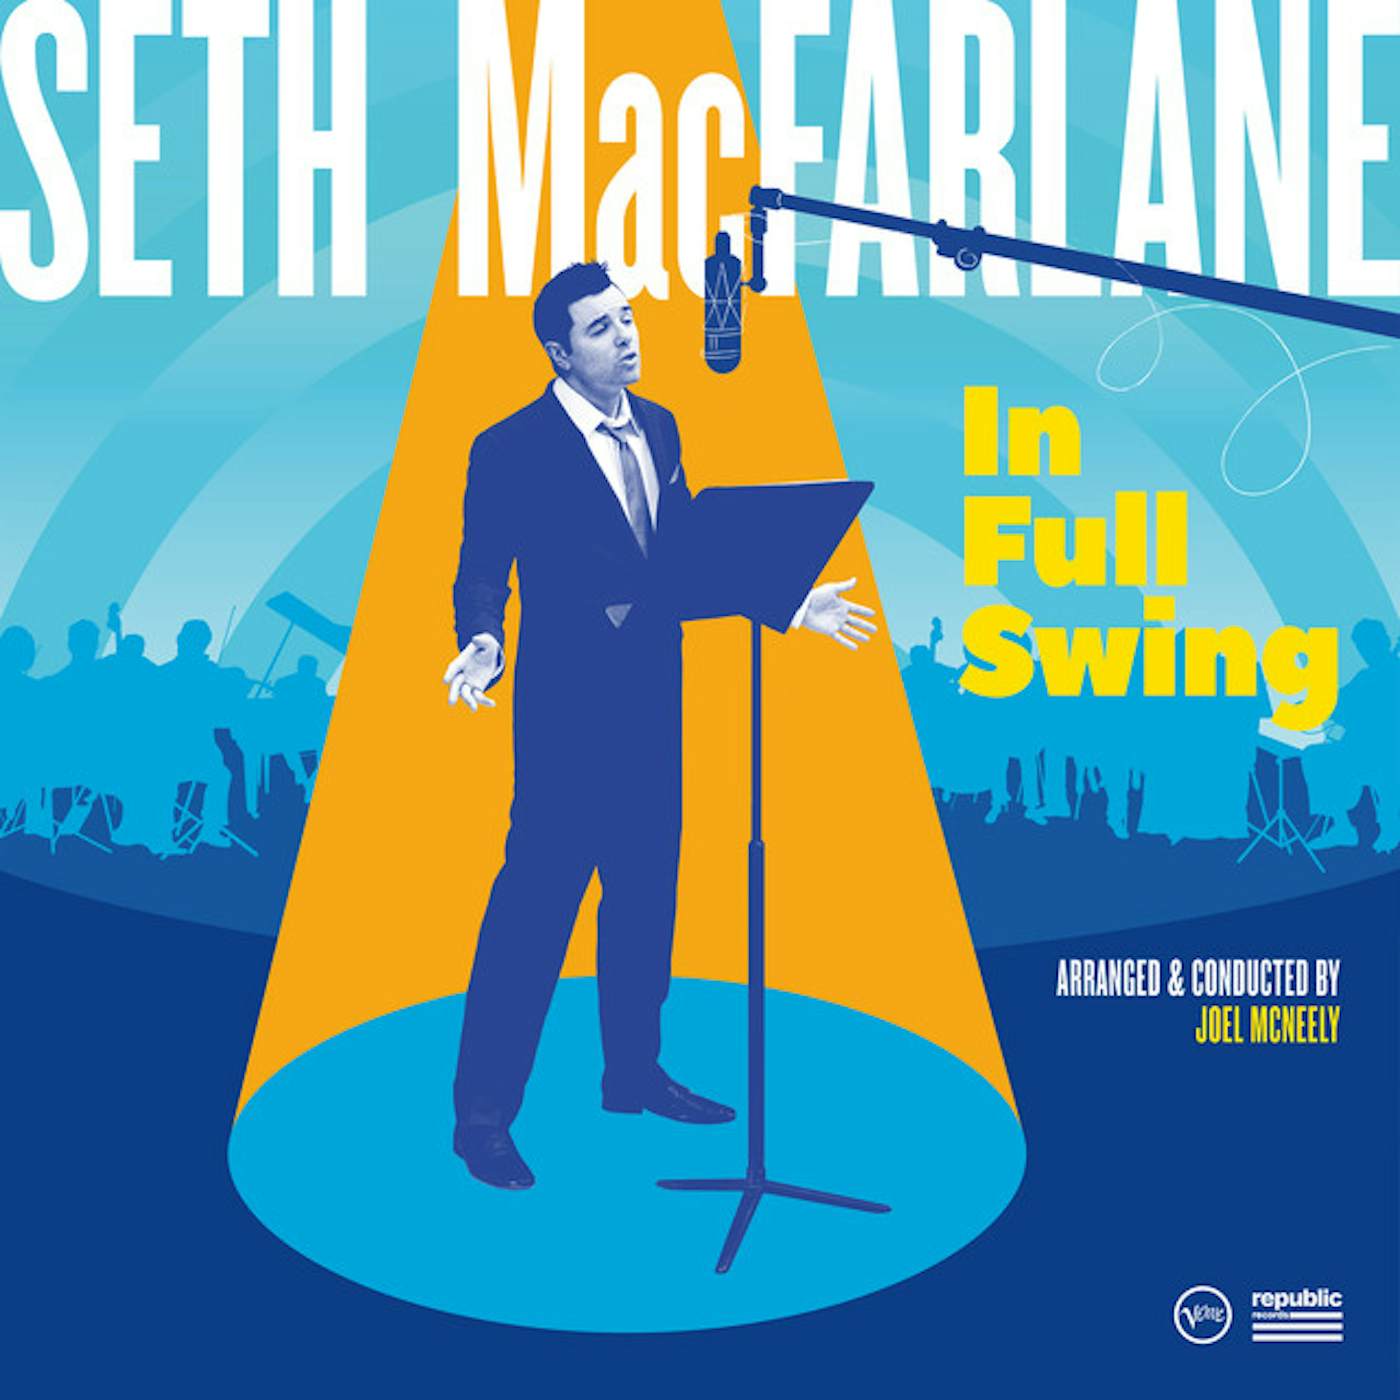 Seth MacFarlane In Full Swing Vinyl Record